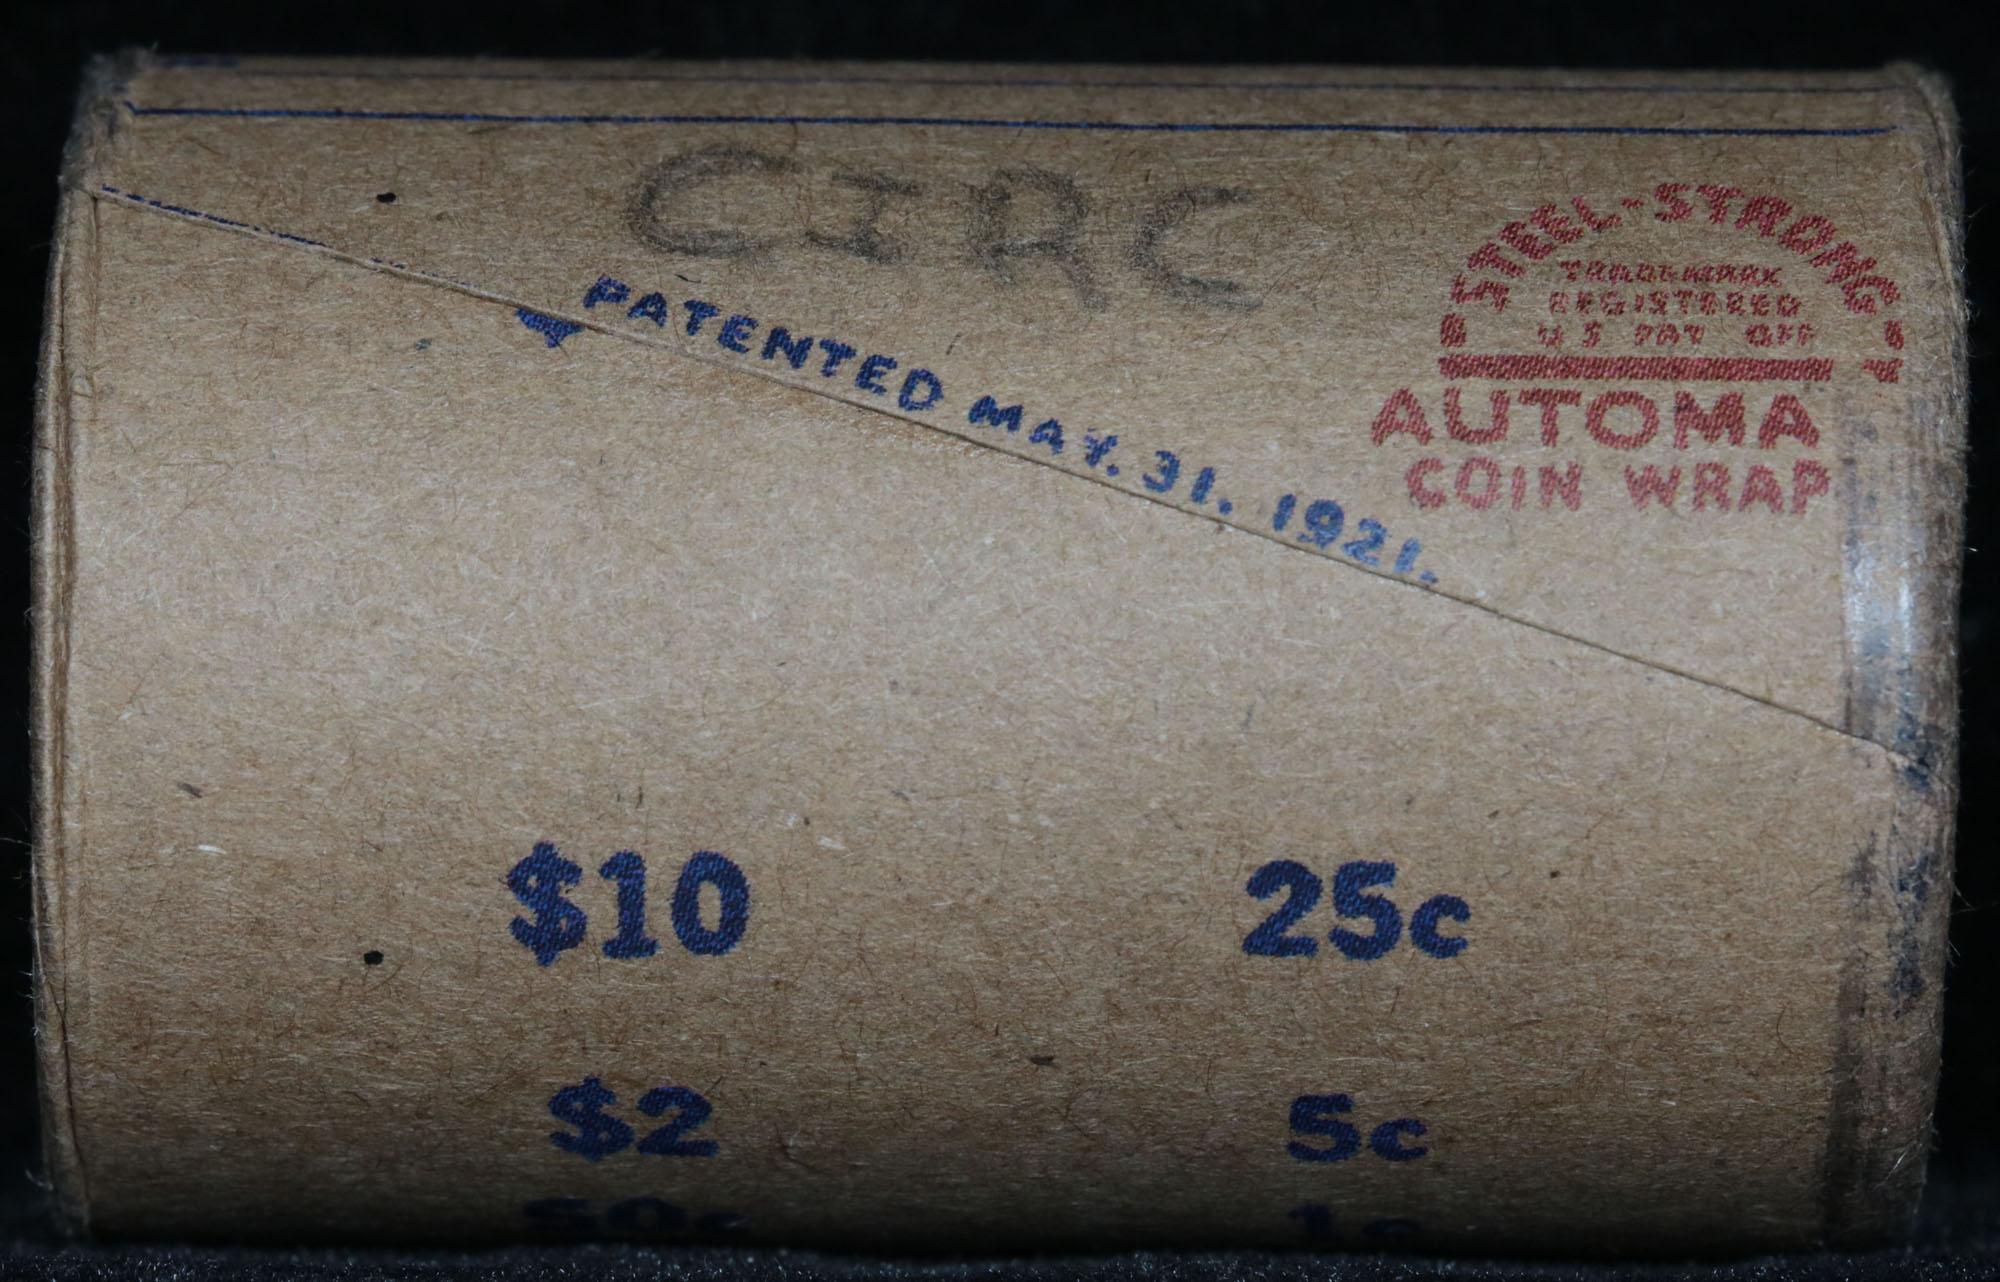 ***Auction Highlight*** Morgan dollar roll ends 1889 & 'cc', Better than average circ (fc)